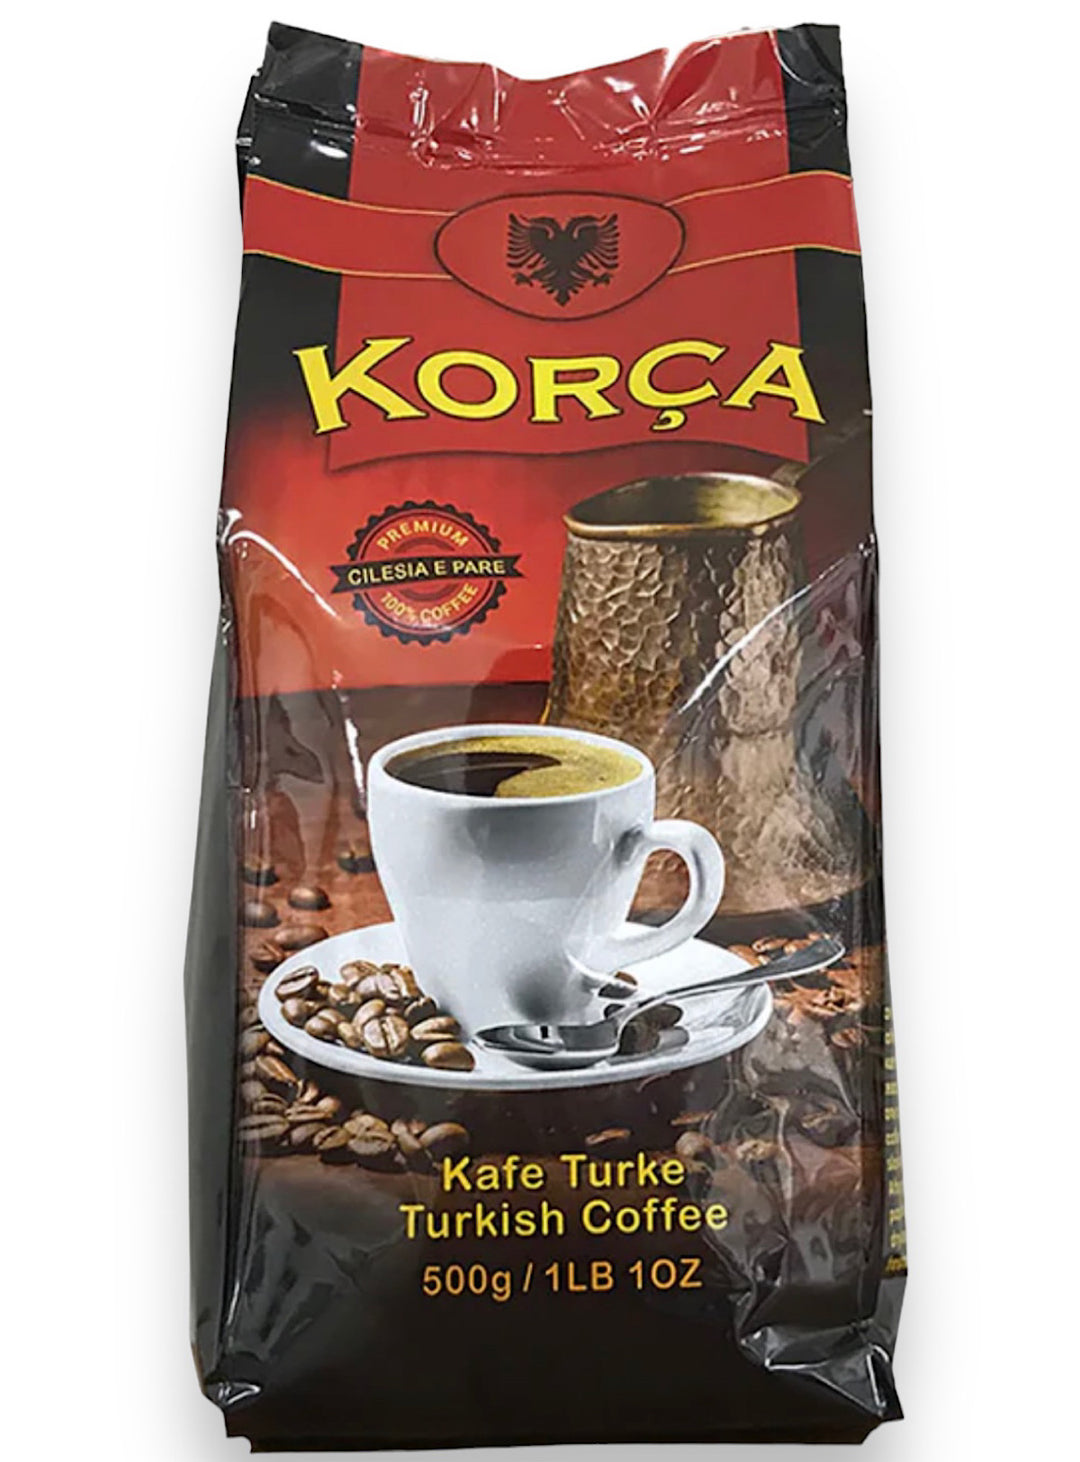 Korca Albanian Coffee - 500g